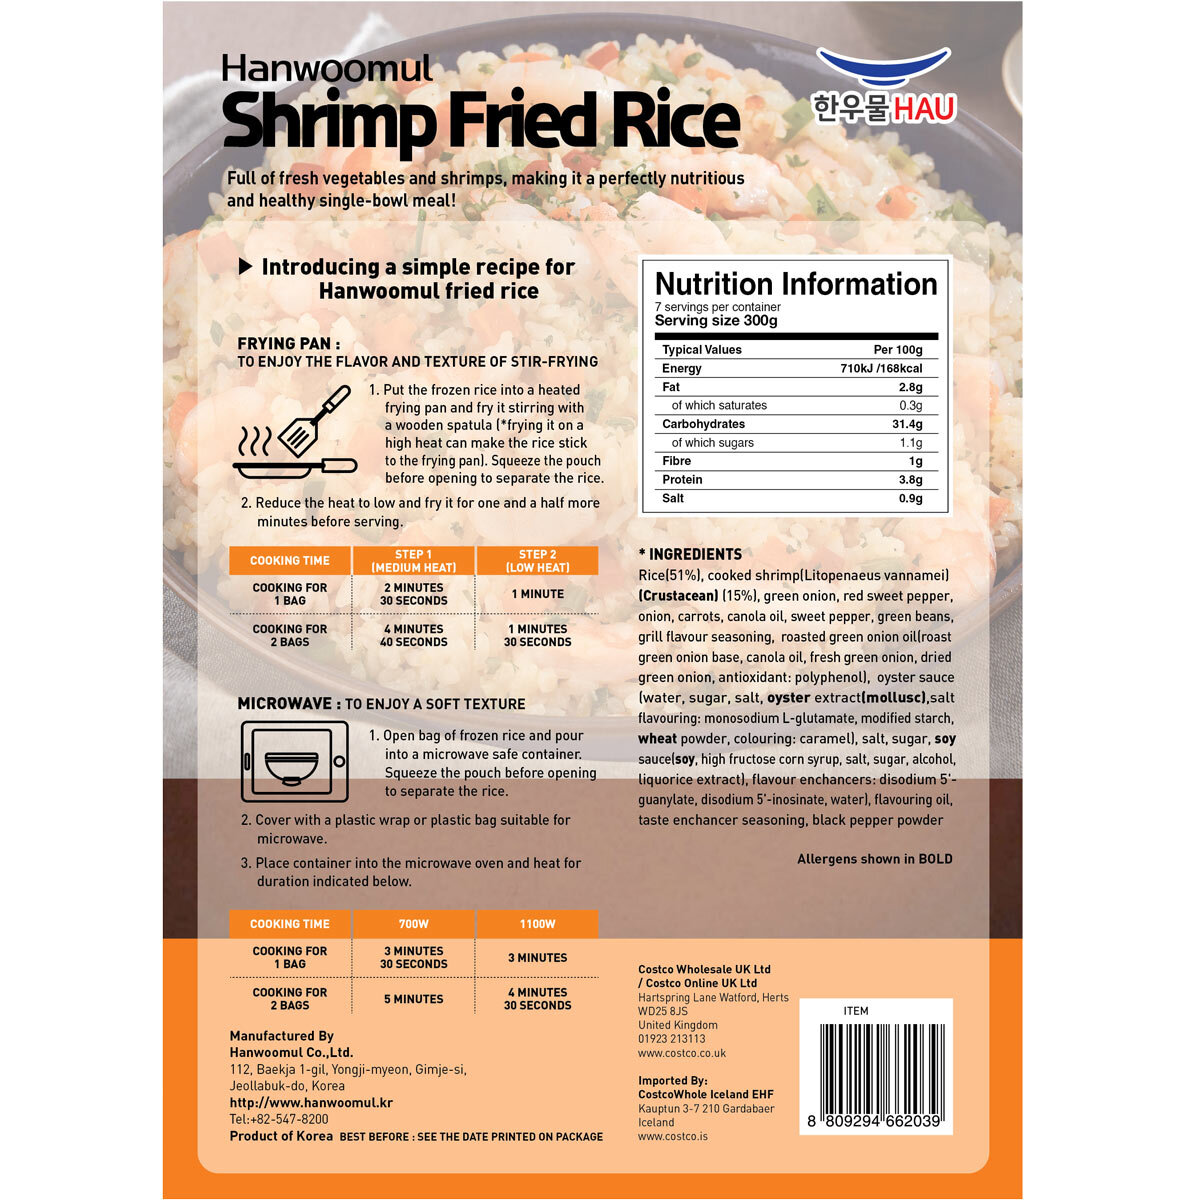 Back of pack of shrimp fried rice